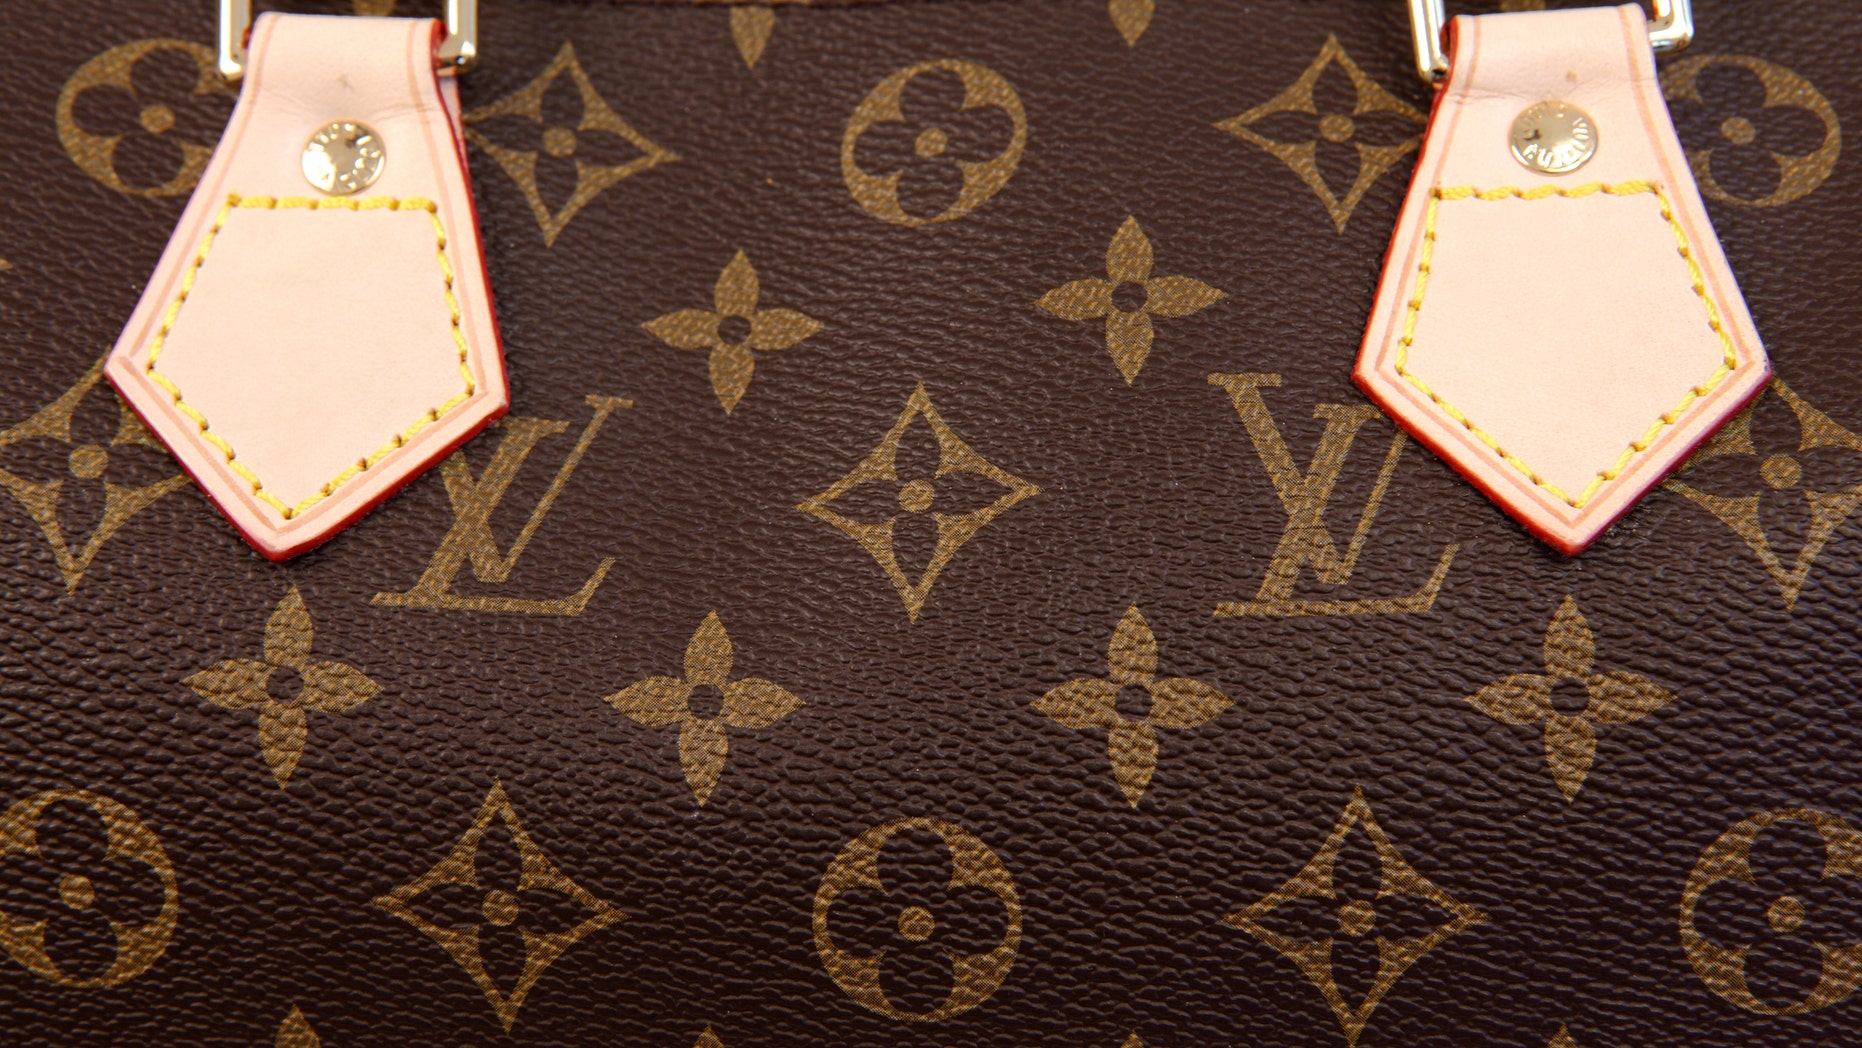 Louis Vuitton designed a luxury Jenga set priced at $2,400 | Fox News